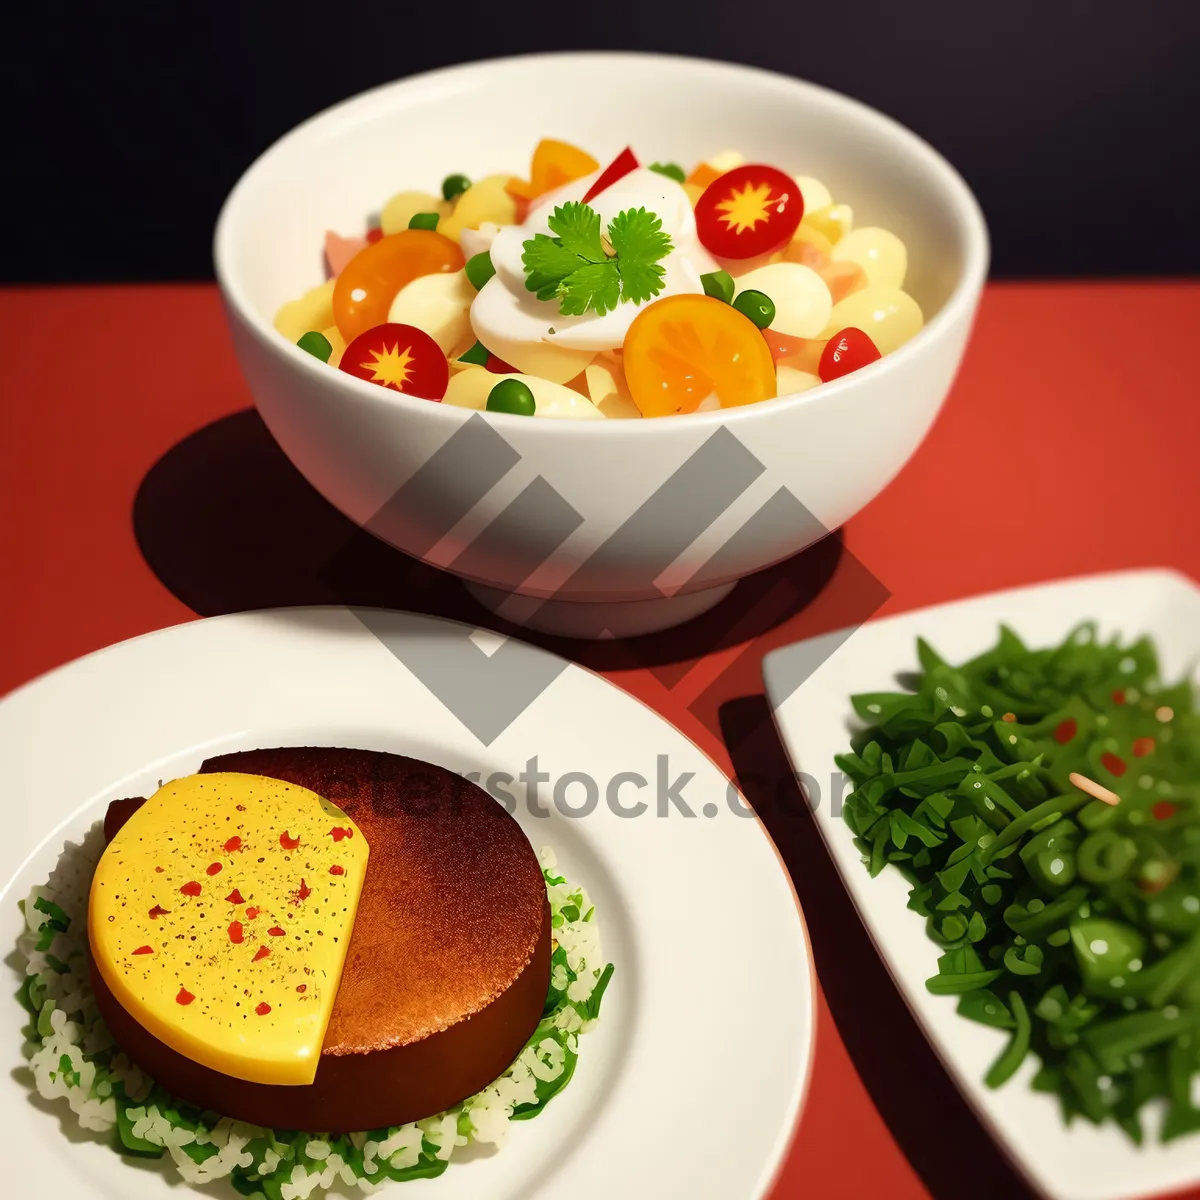 Picture of Wholesome Veggie Delight: Pepper and Tomato Salad